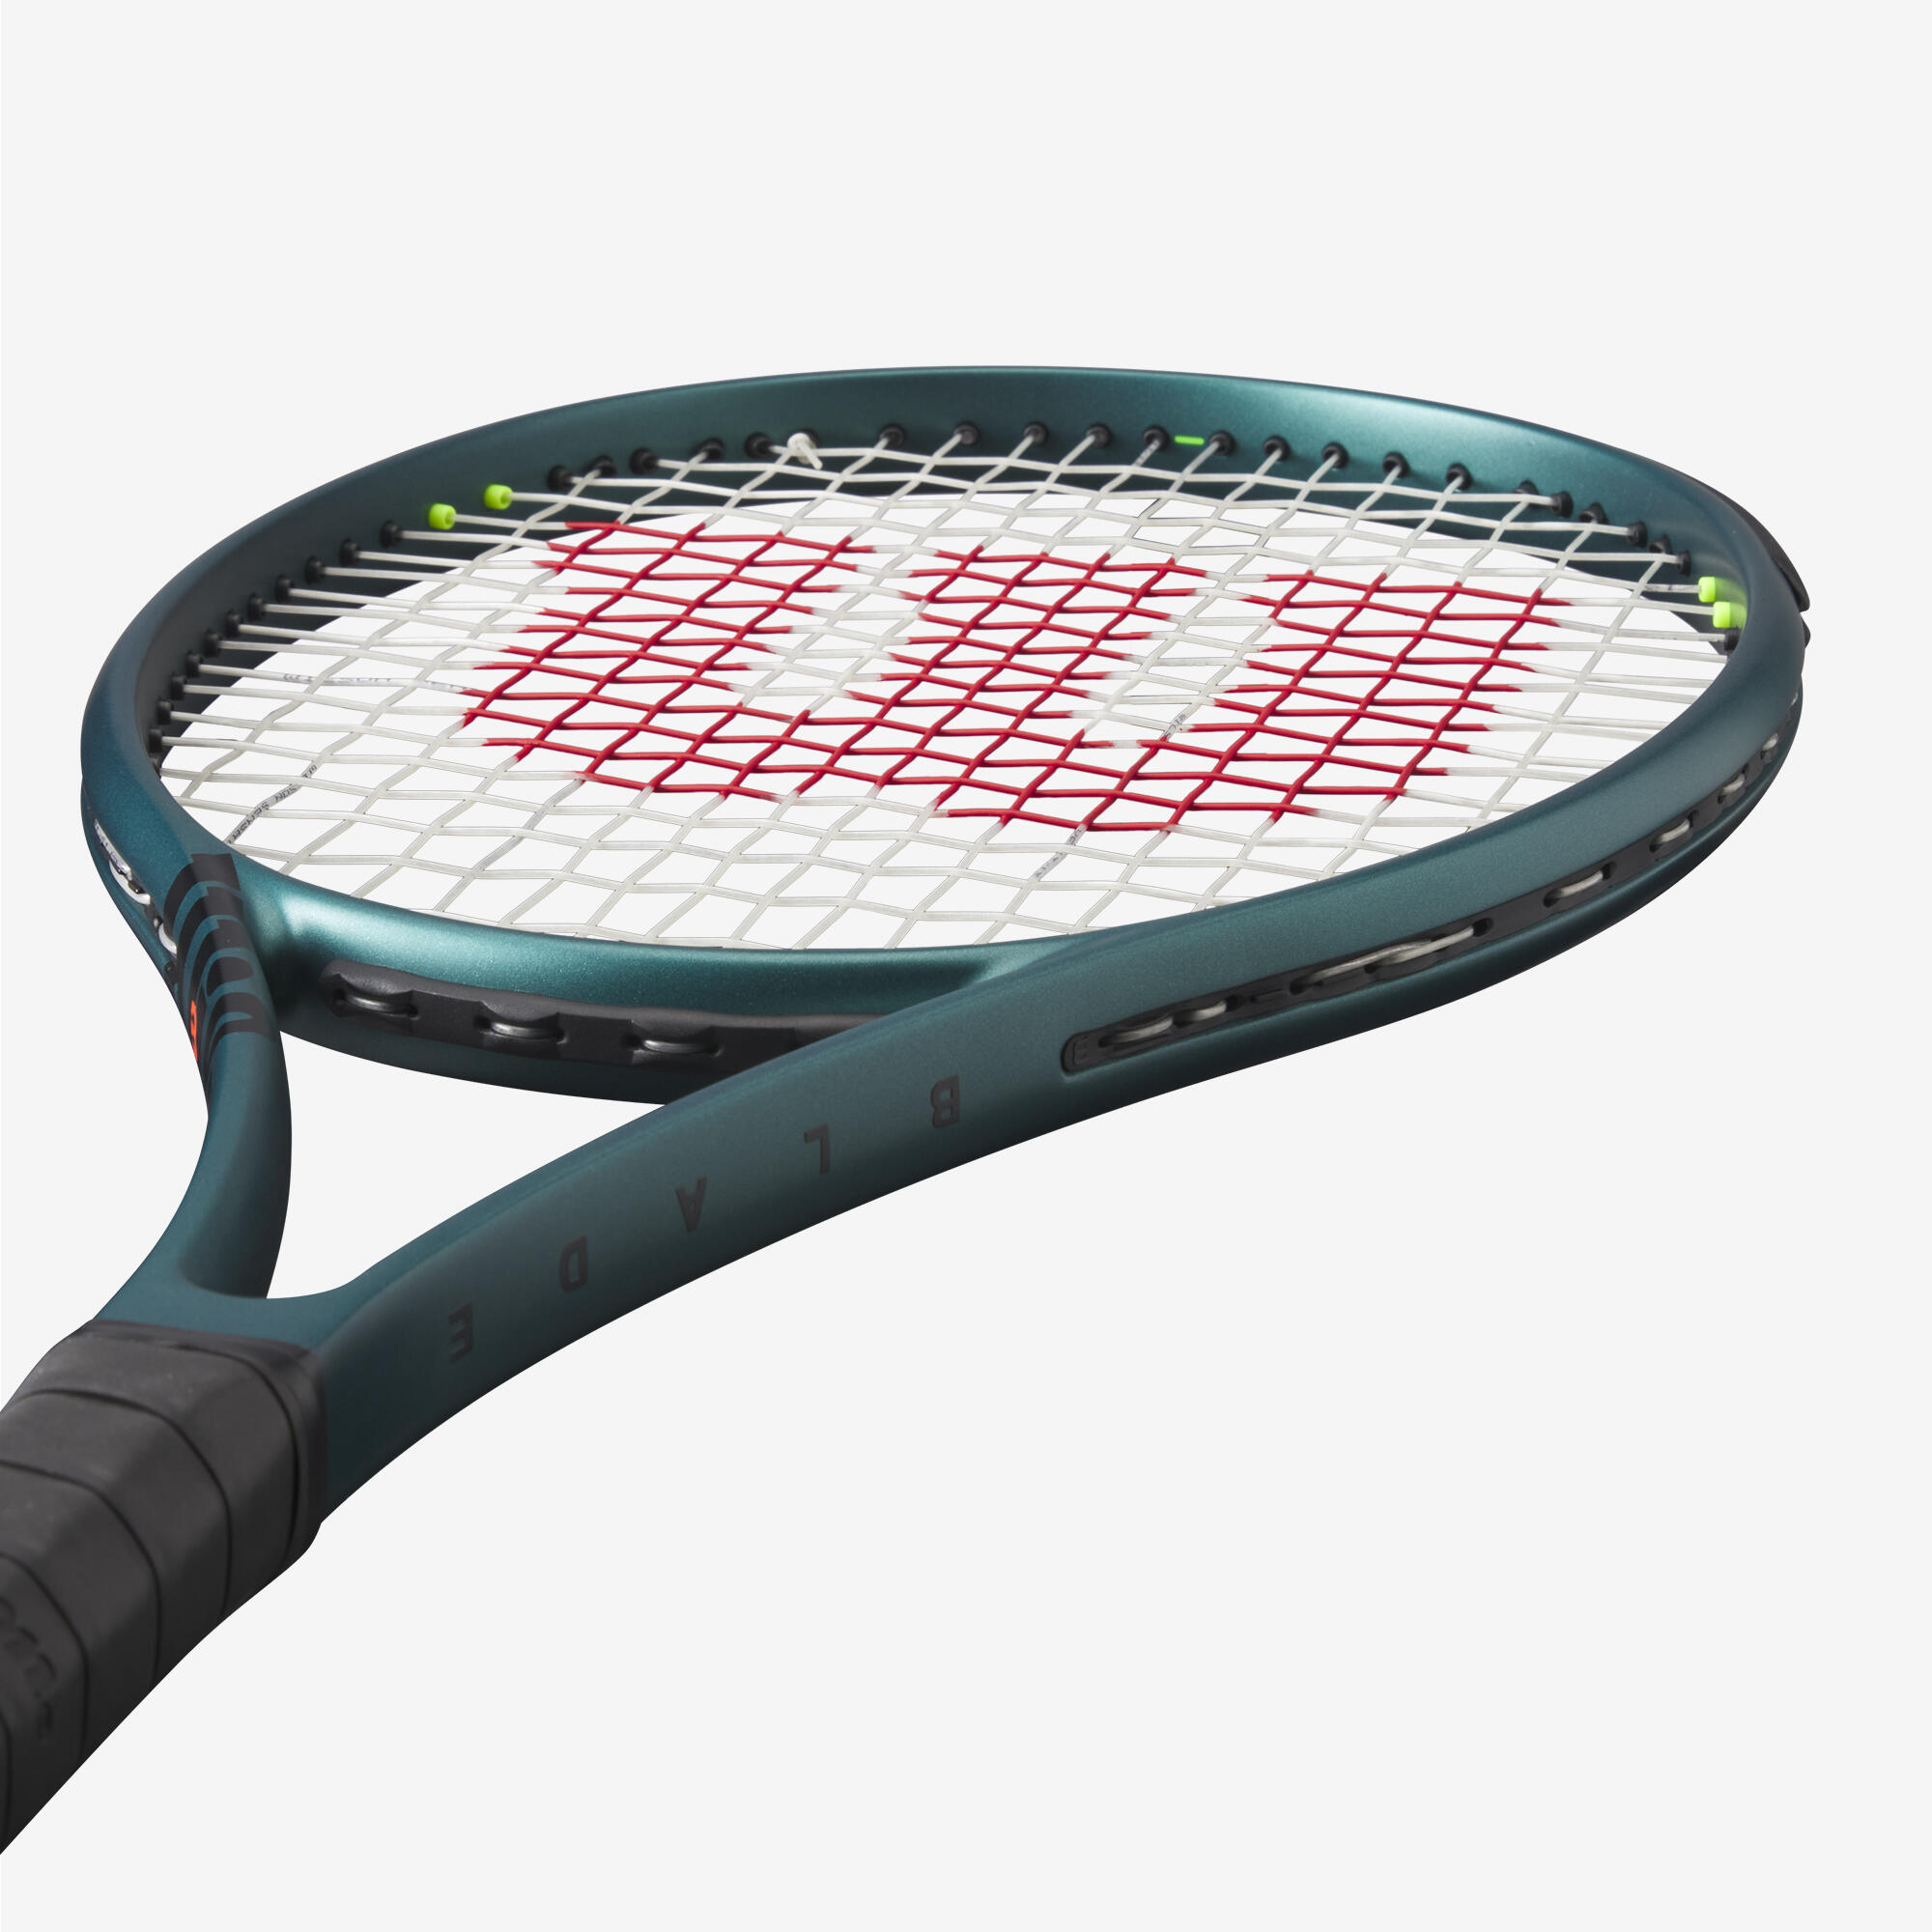 Adult Tennis Racket Blade 101L V9.0 - Green/Black 3/5